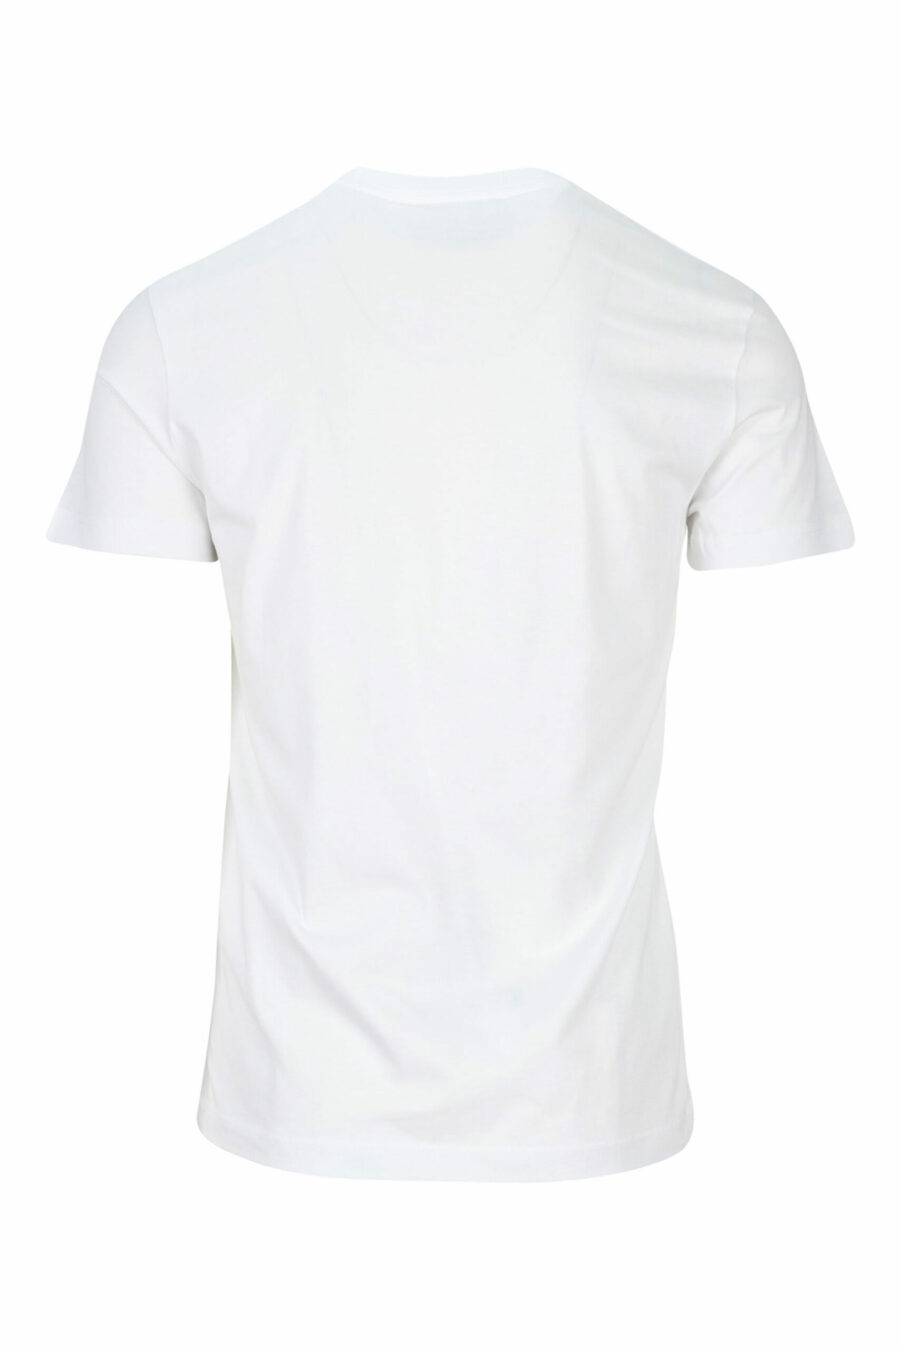 Camiseta blanca con minilogo "piece number" plateado - 8052019456936 1 scaled